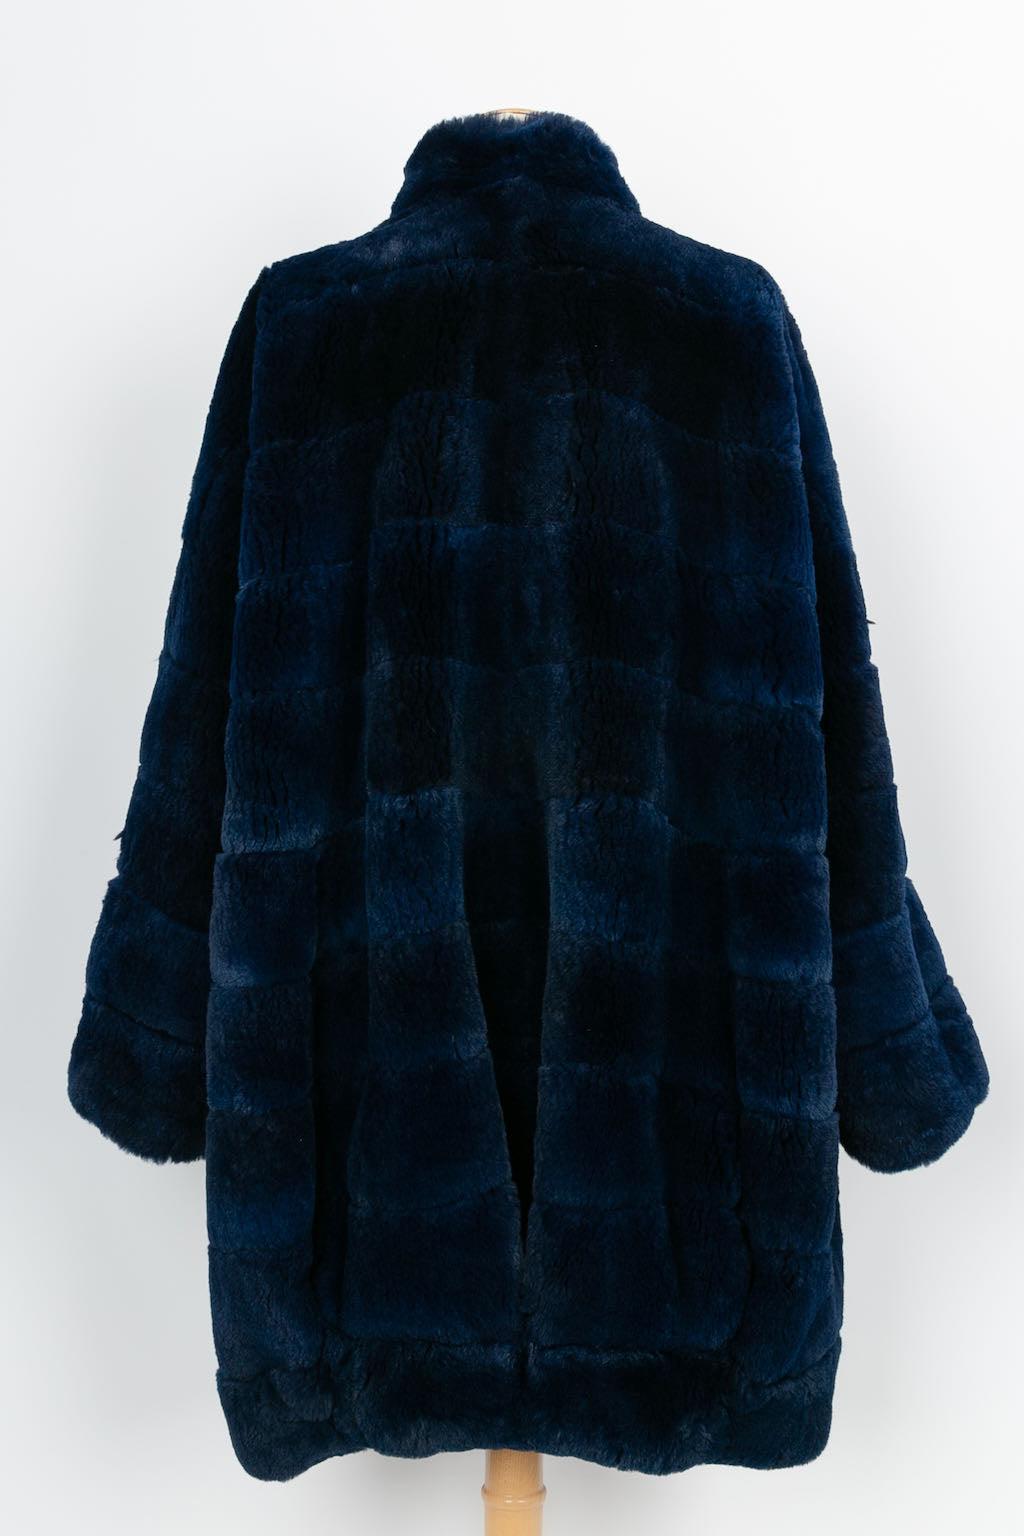 Christian Dior Blue Fur Coat in Black Silk Lining In Excellent Condition For Sale In SAINT-OUEN-SUR-SEINE, FR